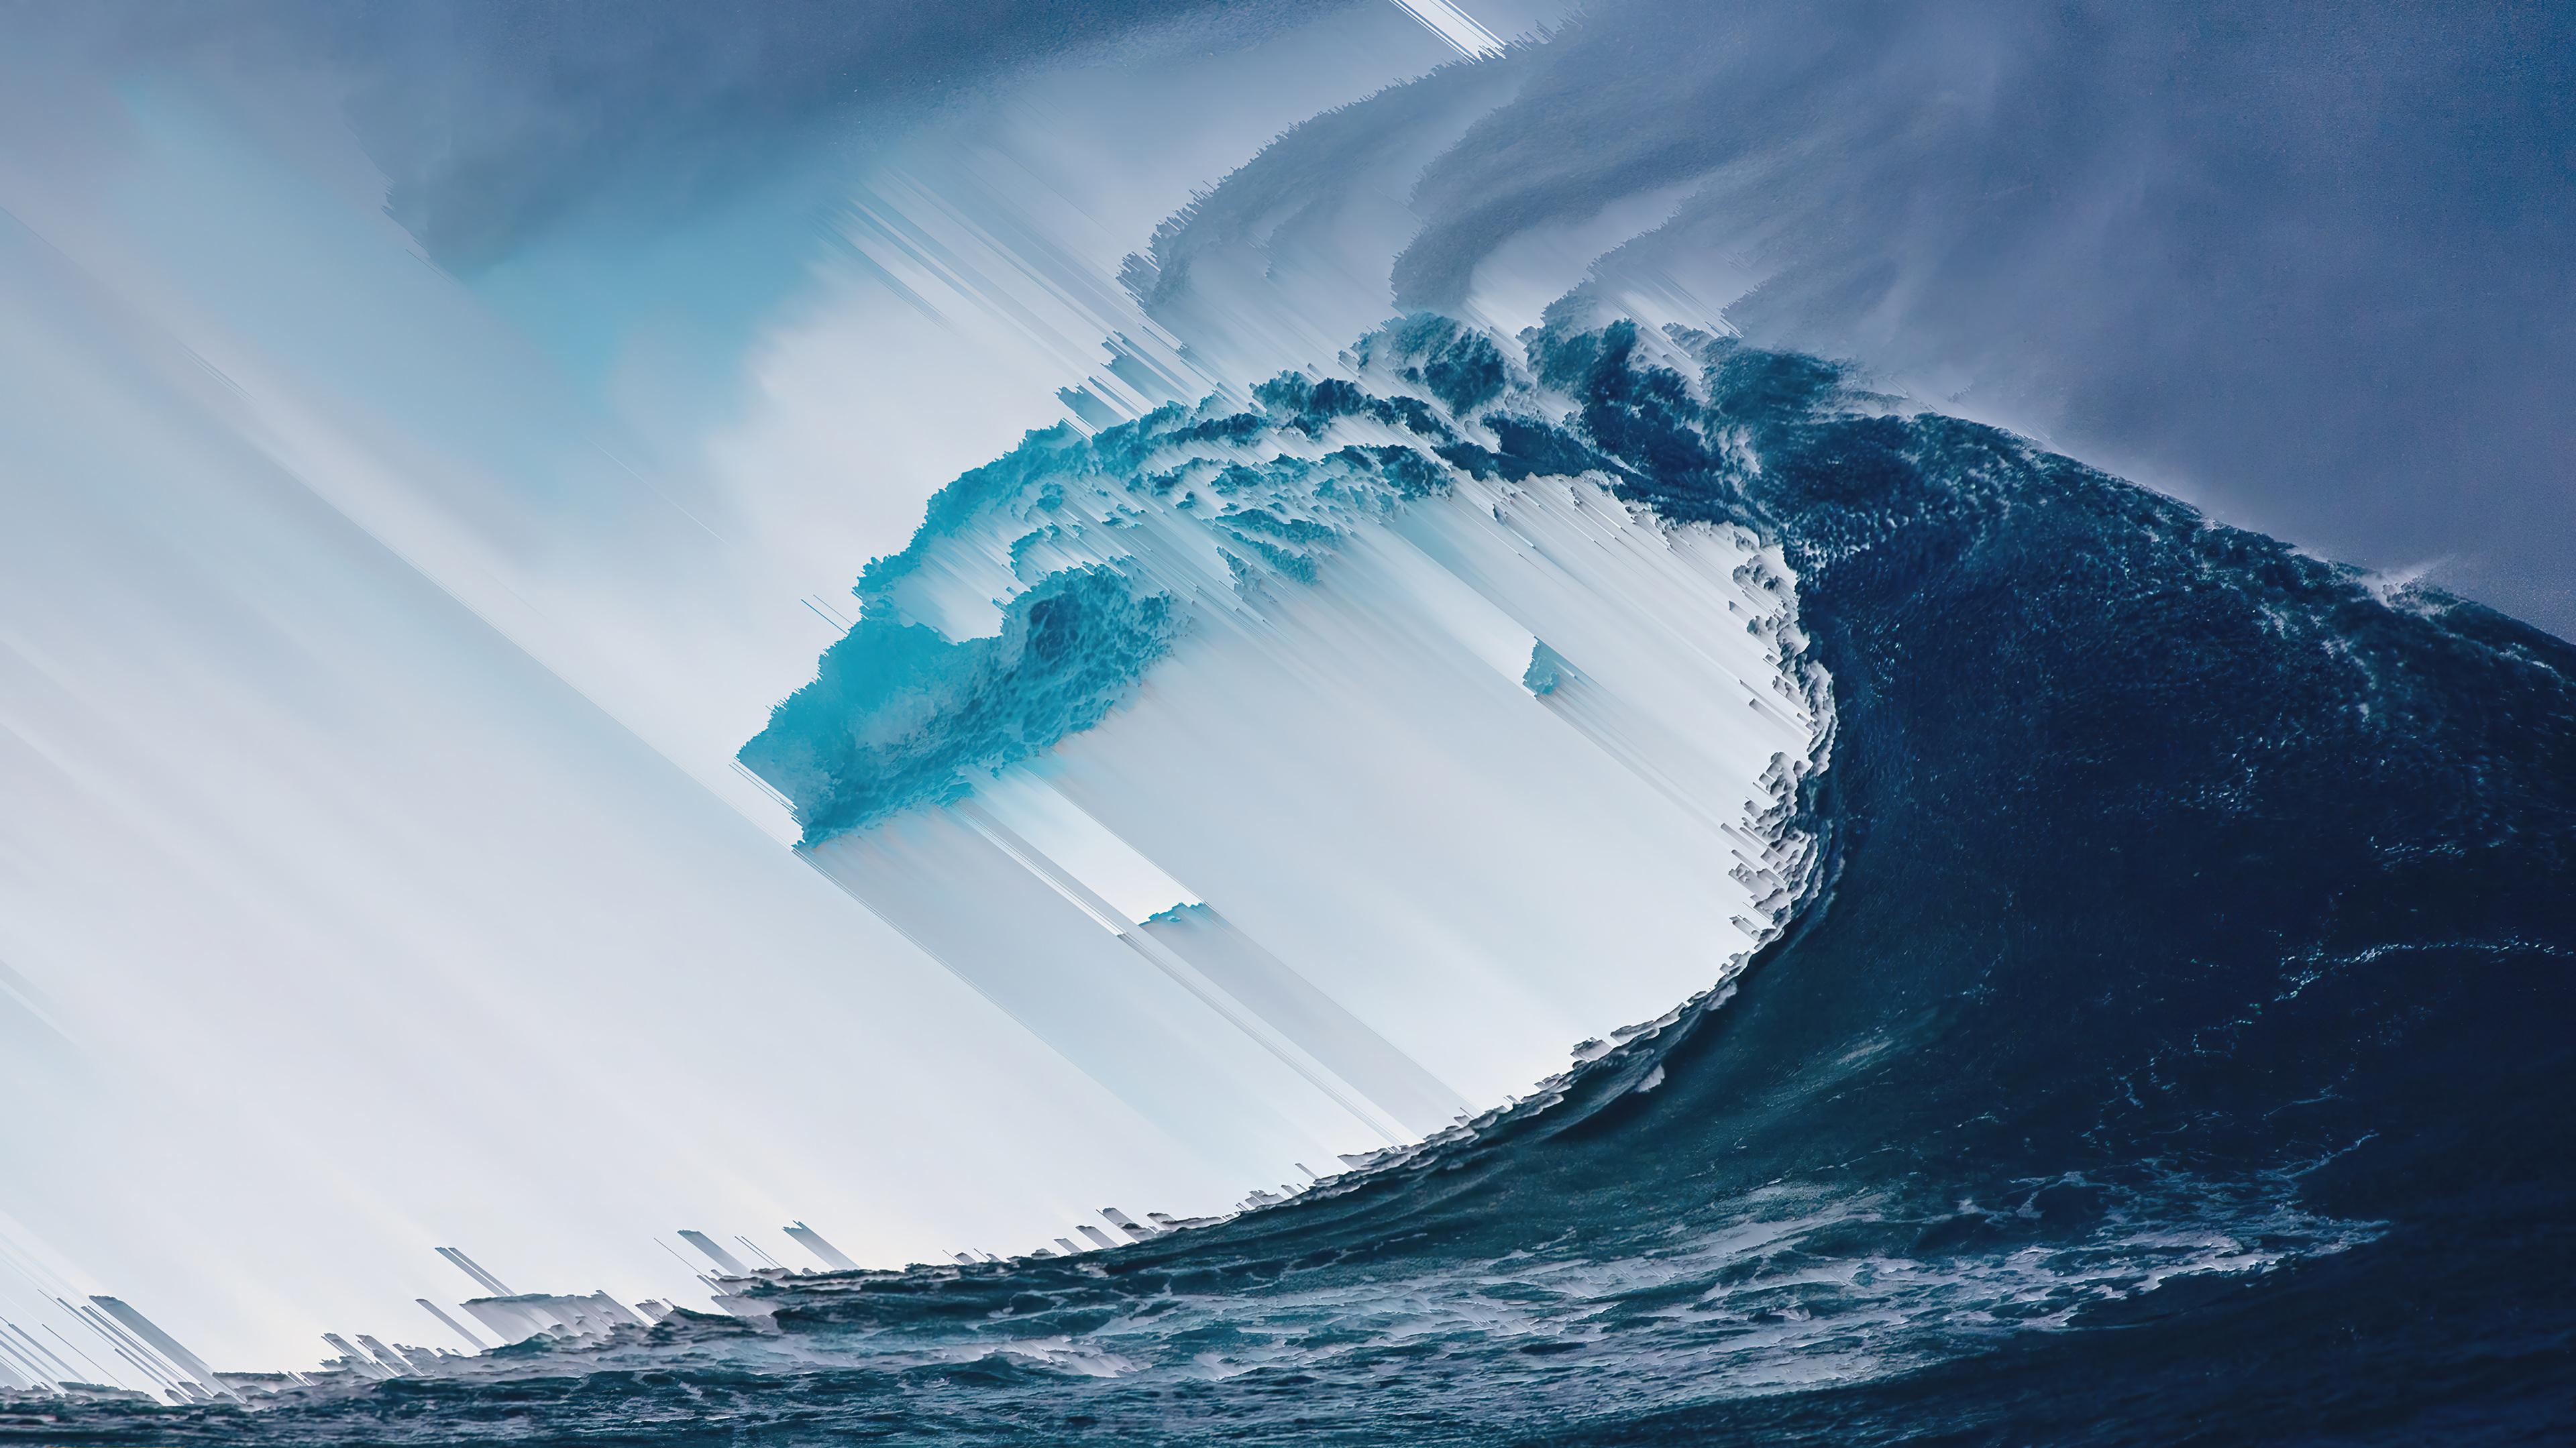 Ocean Wave Digital Art Wallpaper 4k 2290g